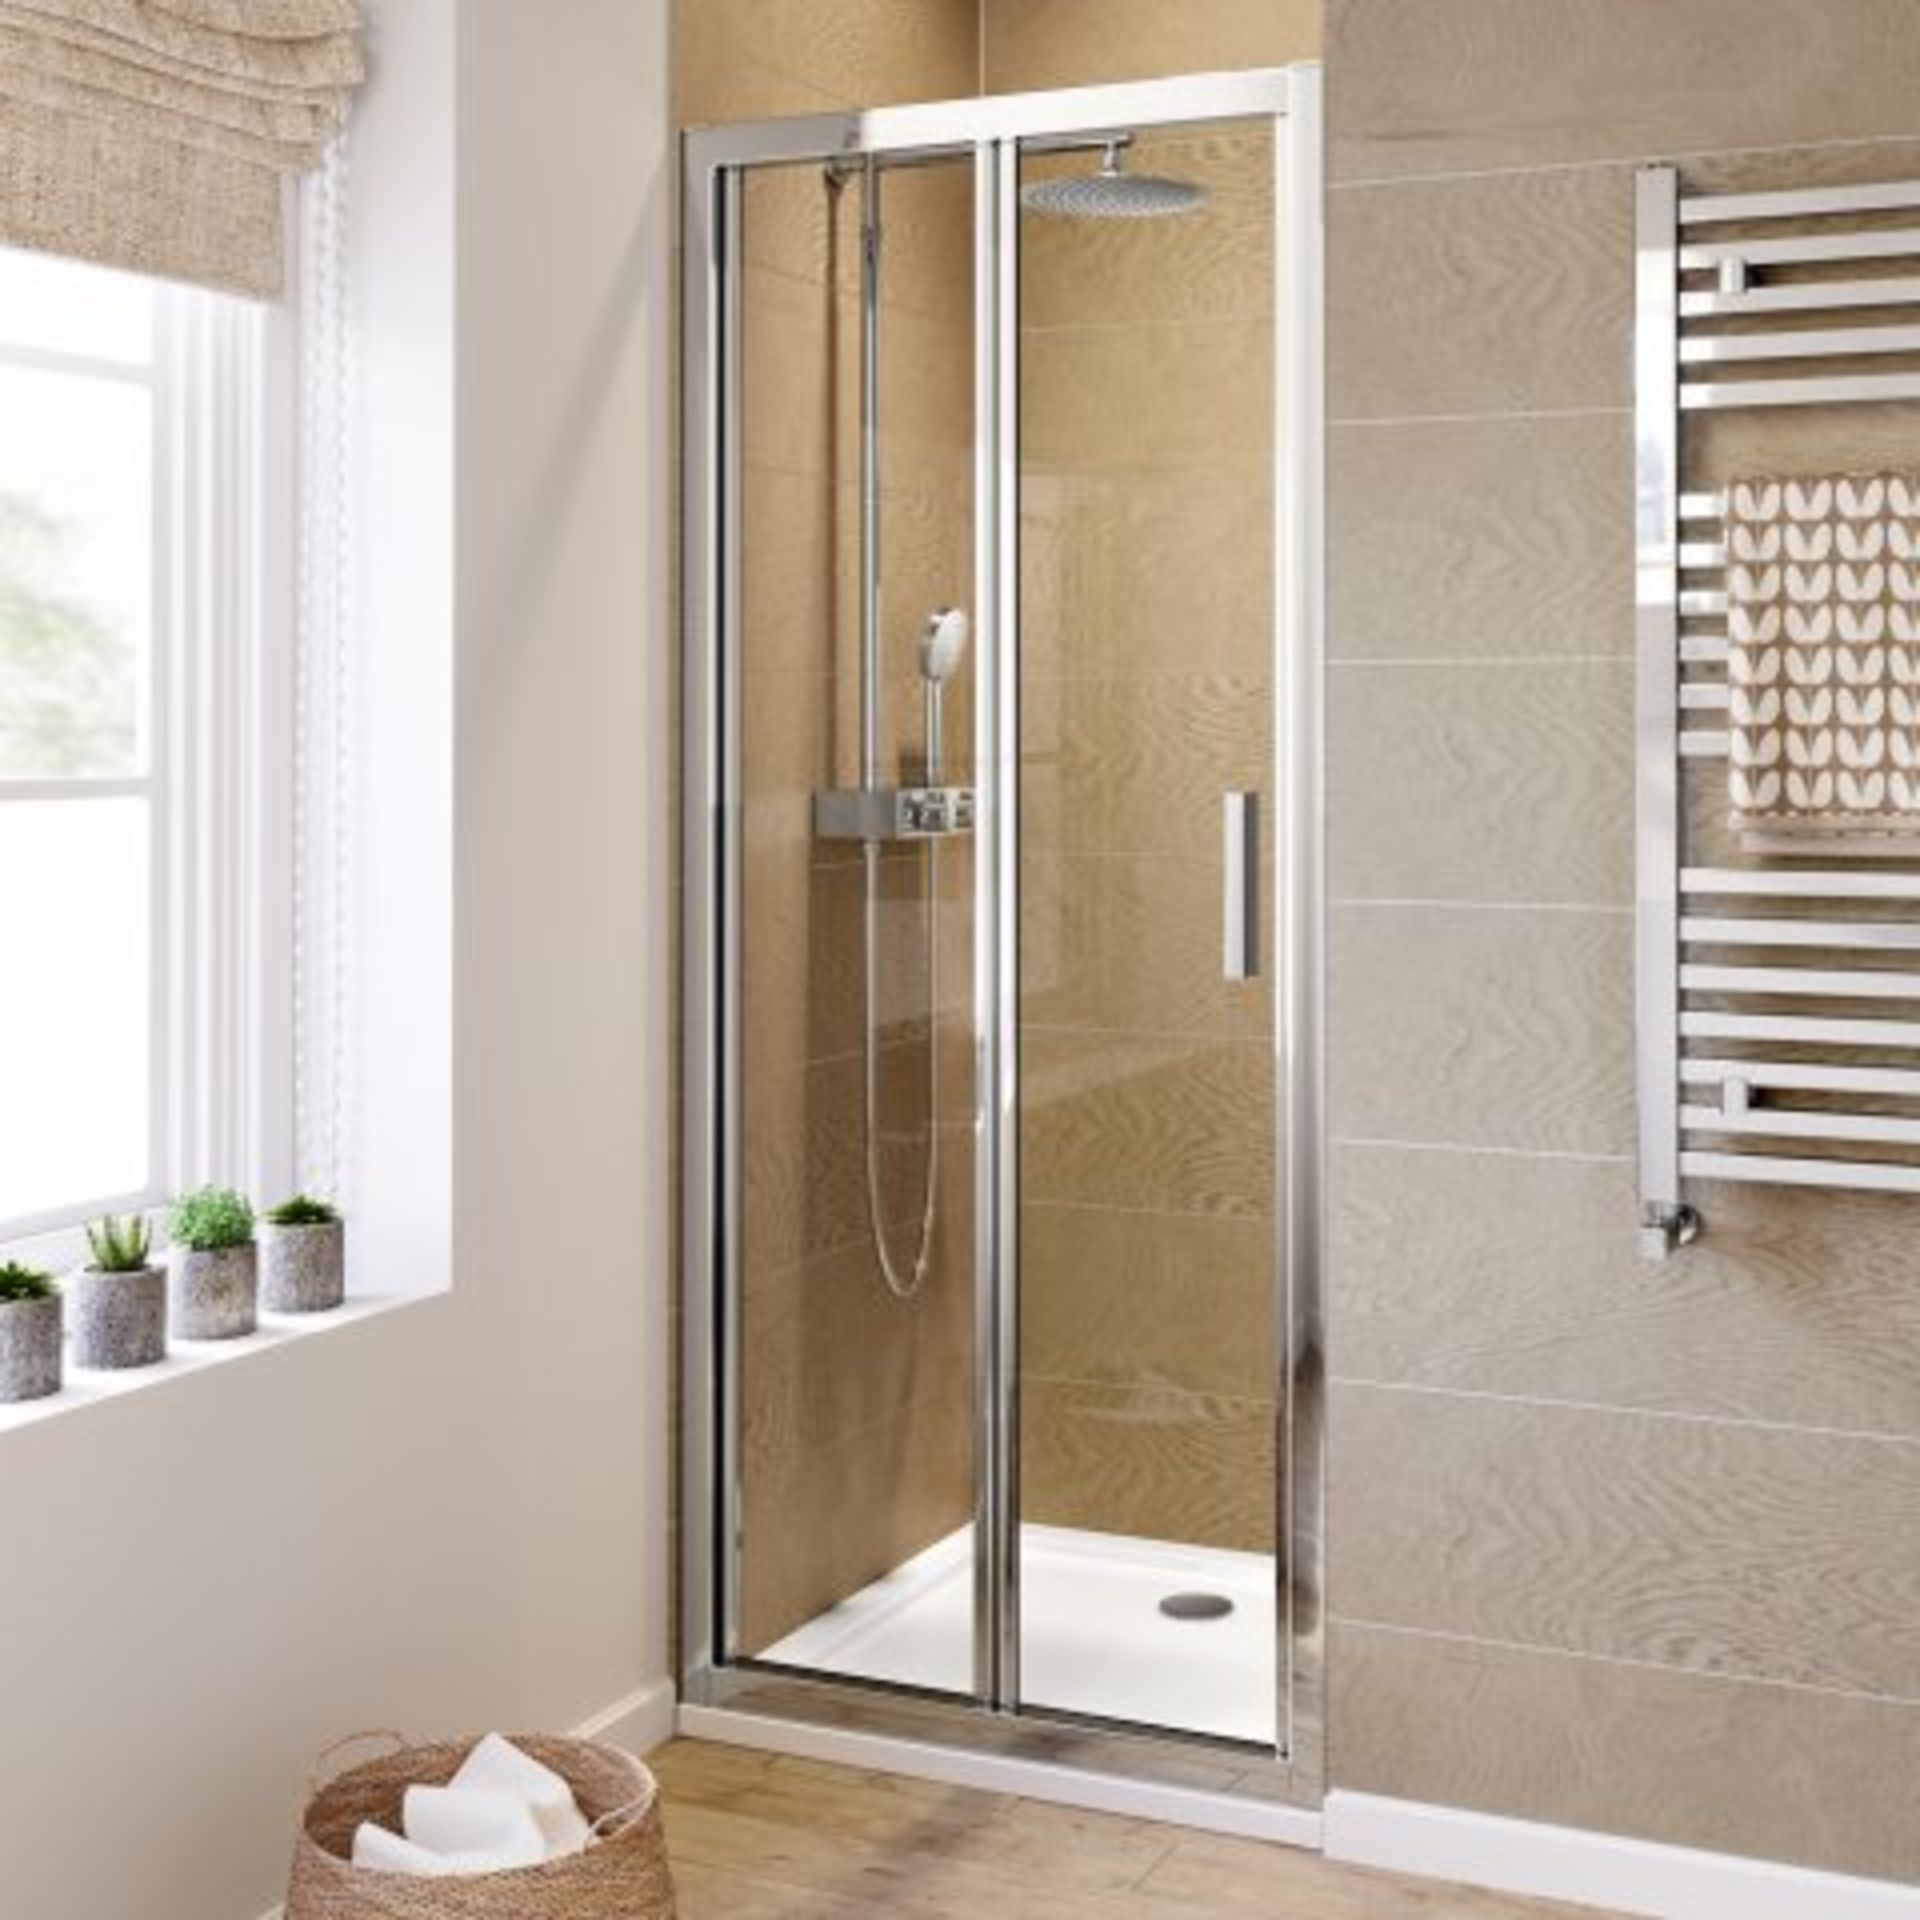 (N72) 900mm - 6mm - Elements EasyClean Bifold Shower Door. RRP £299.99. Essential Design Our - Image 3 of 3